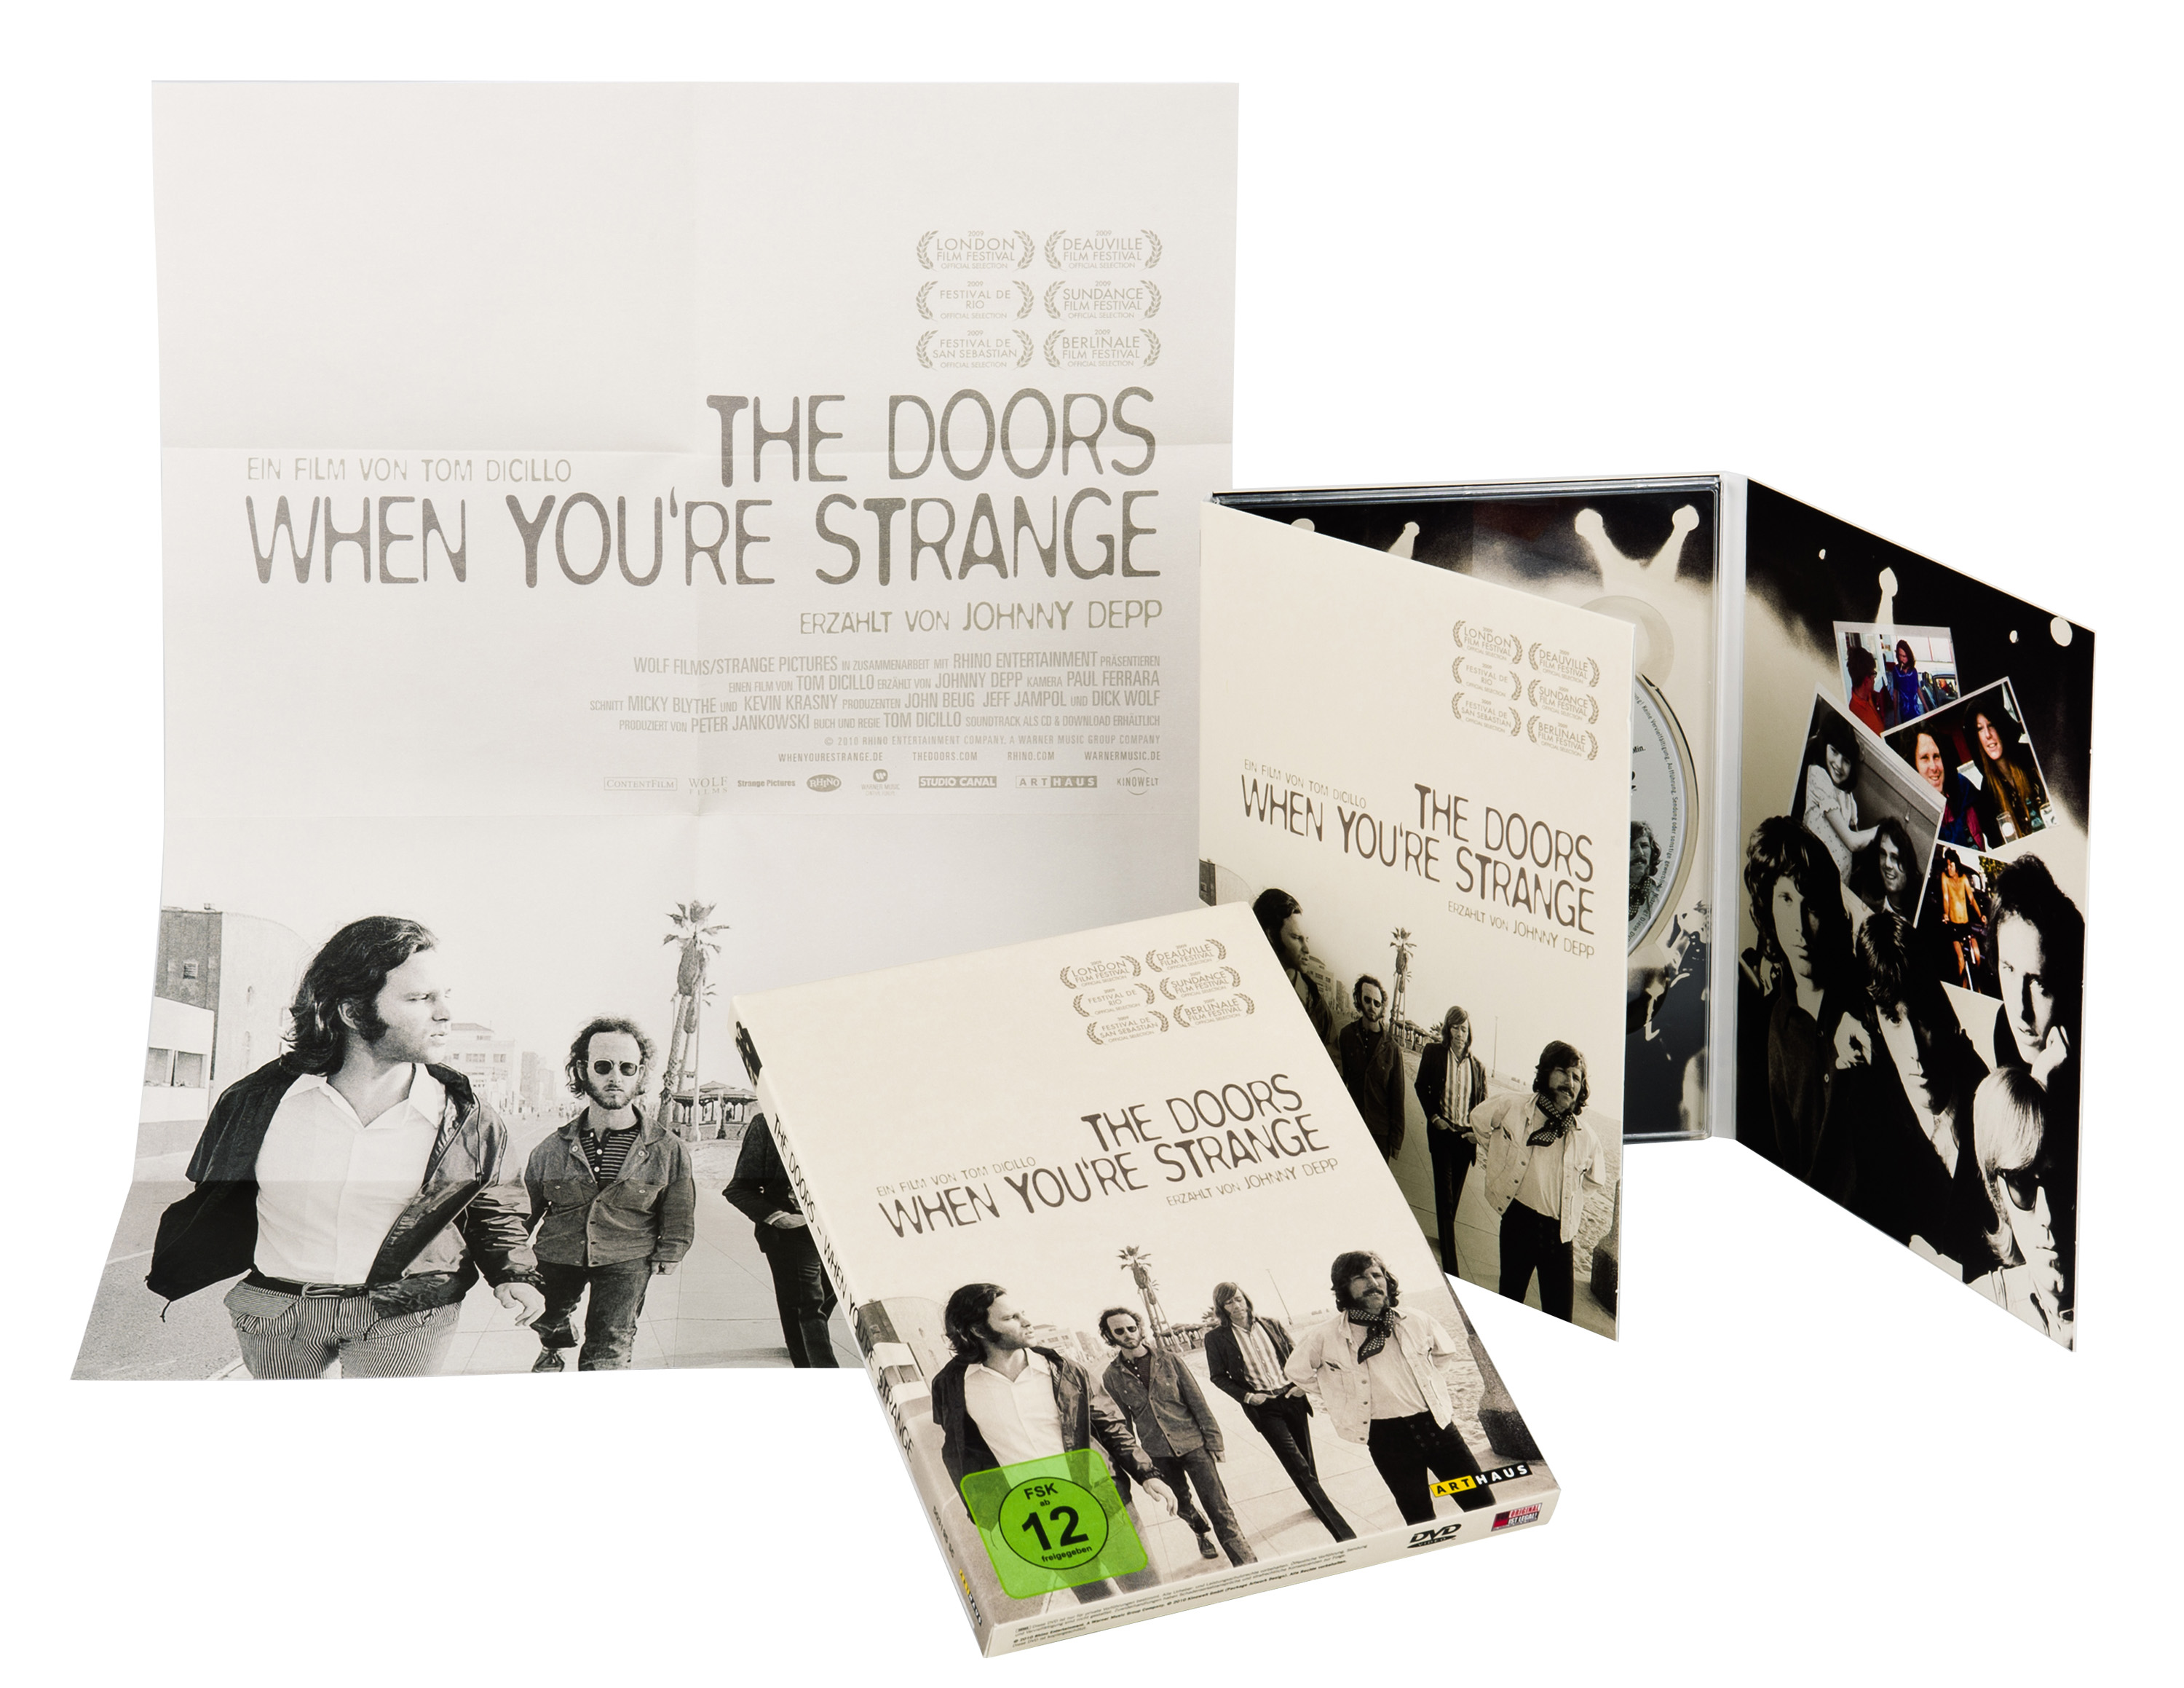 Strange Doors When You\'re The DVD -